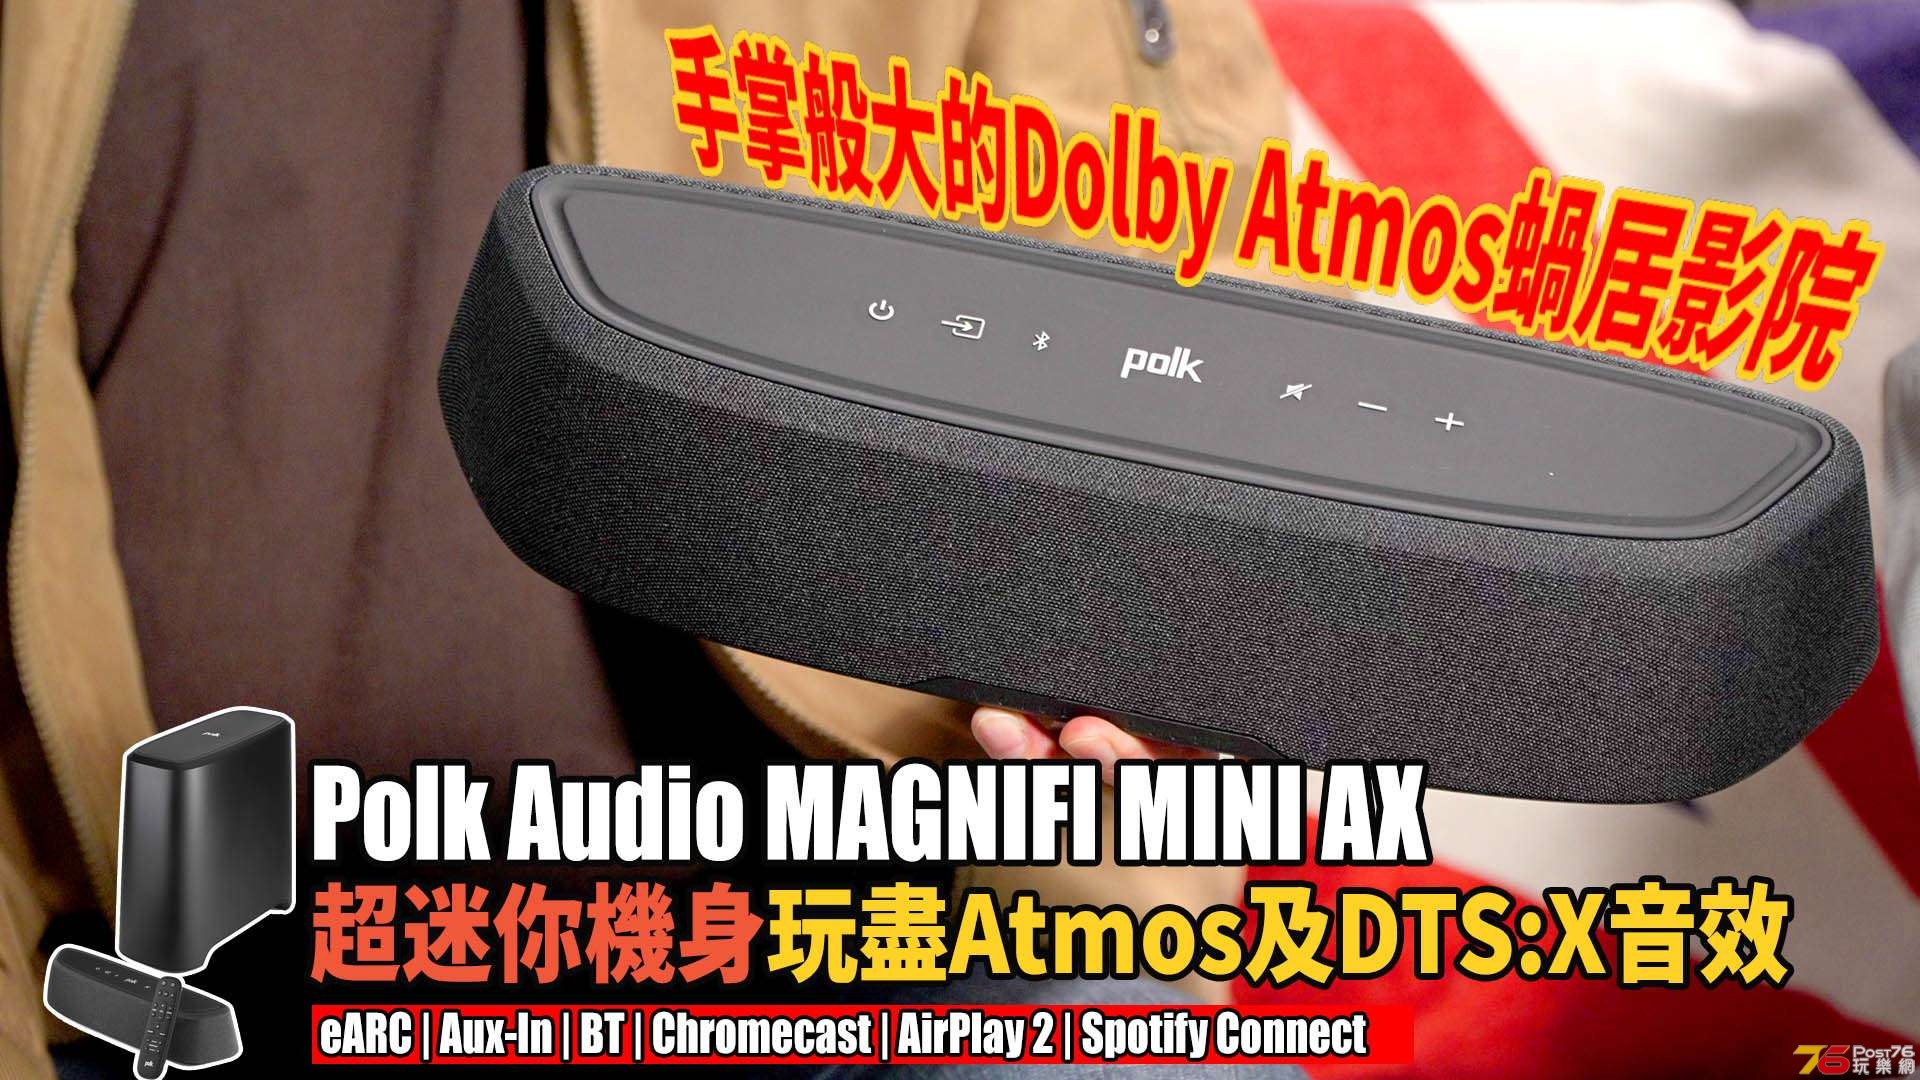 Polk Magnifi Mini AX review forum copy.jpg